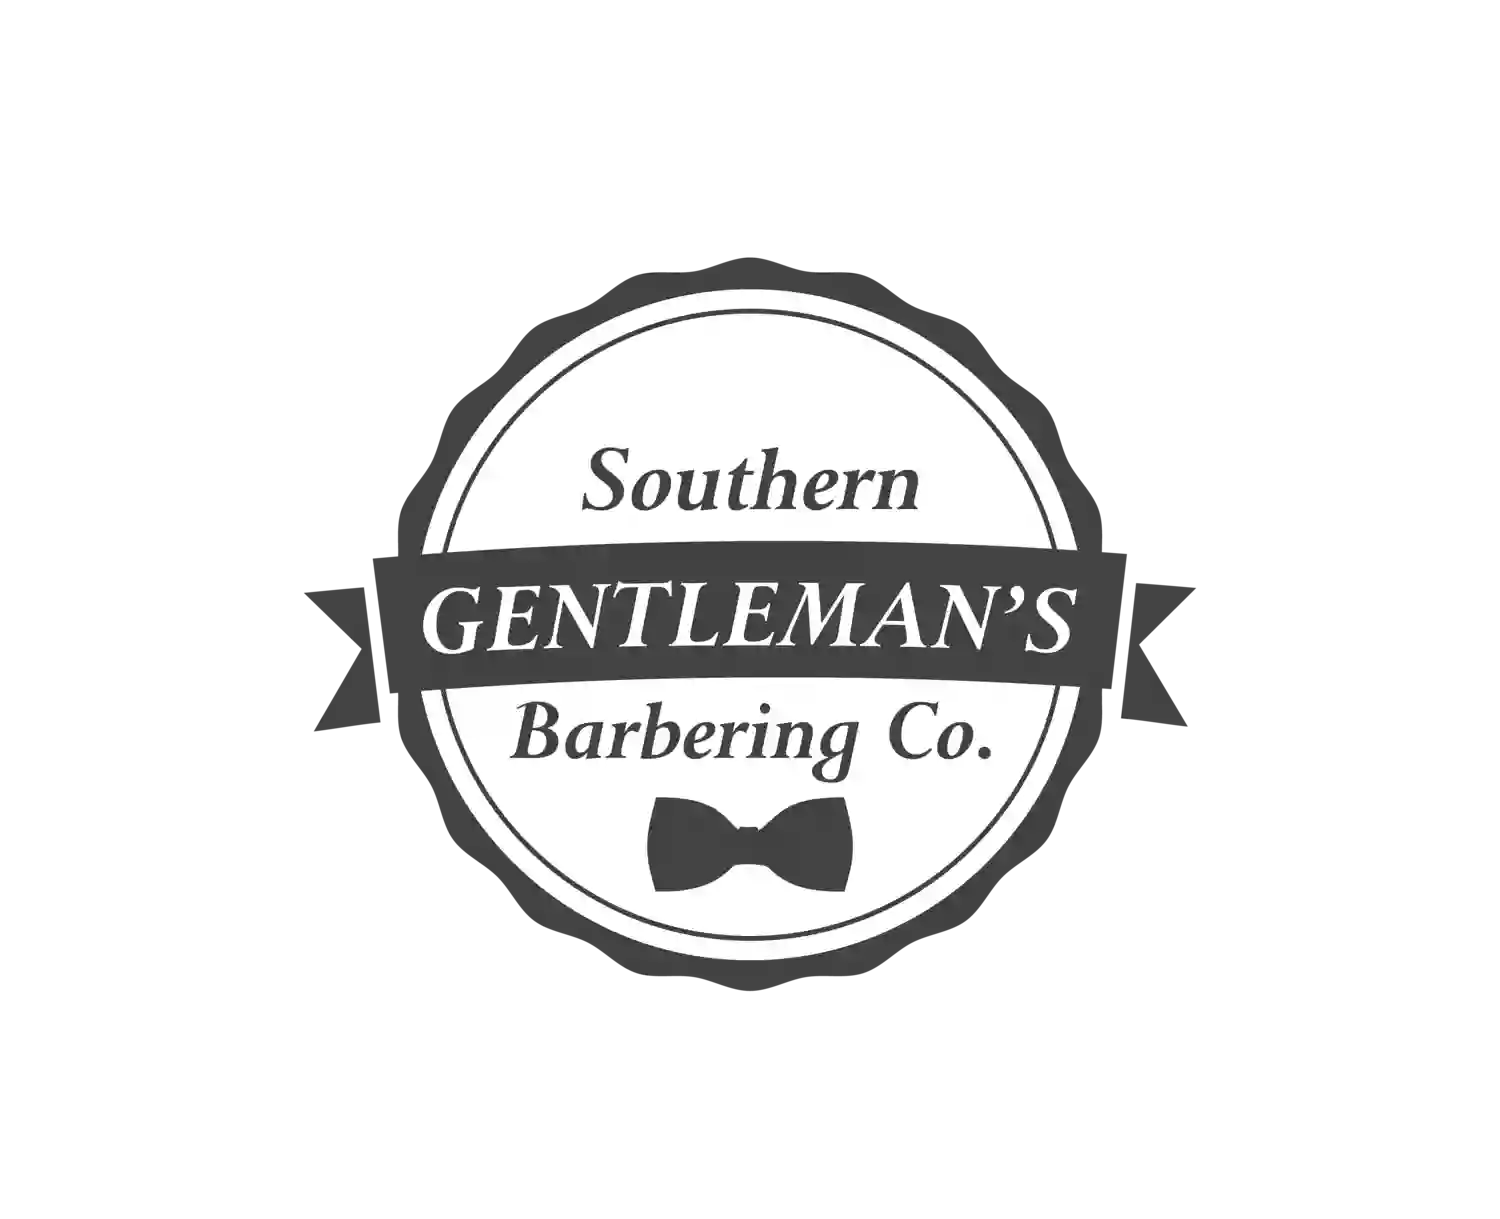 Southern Gentleman's Barbering Co.